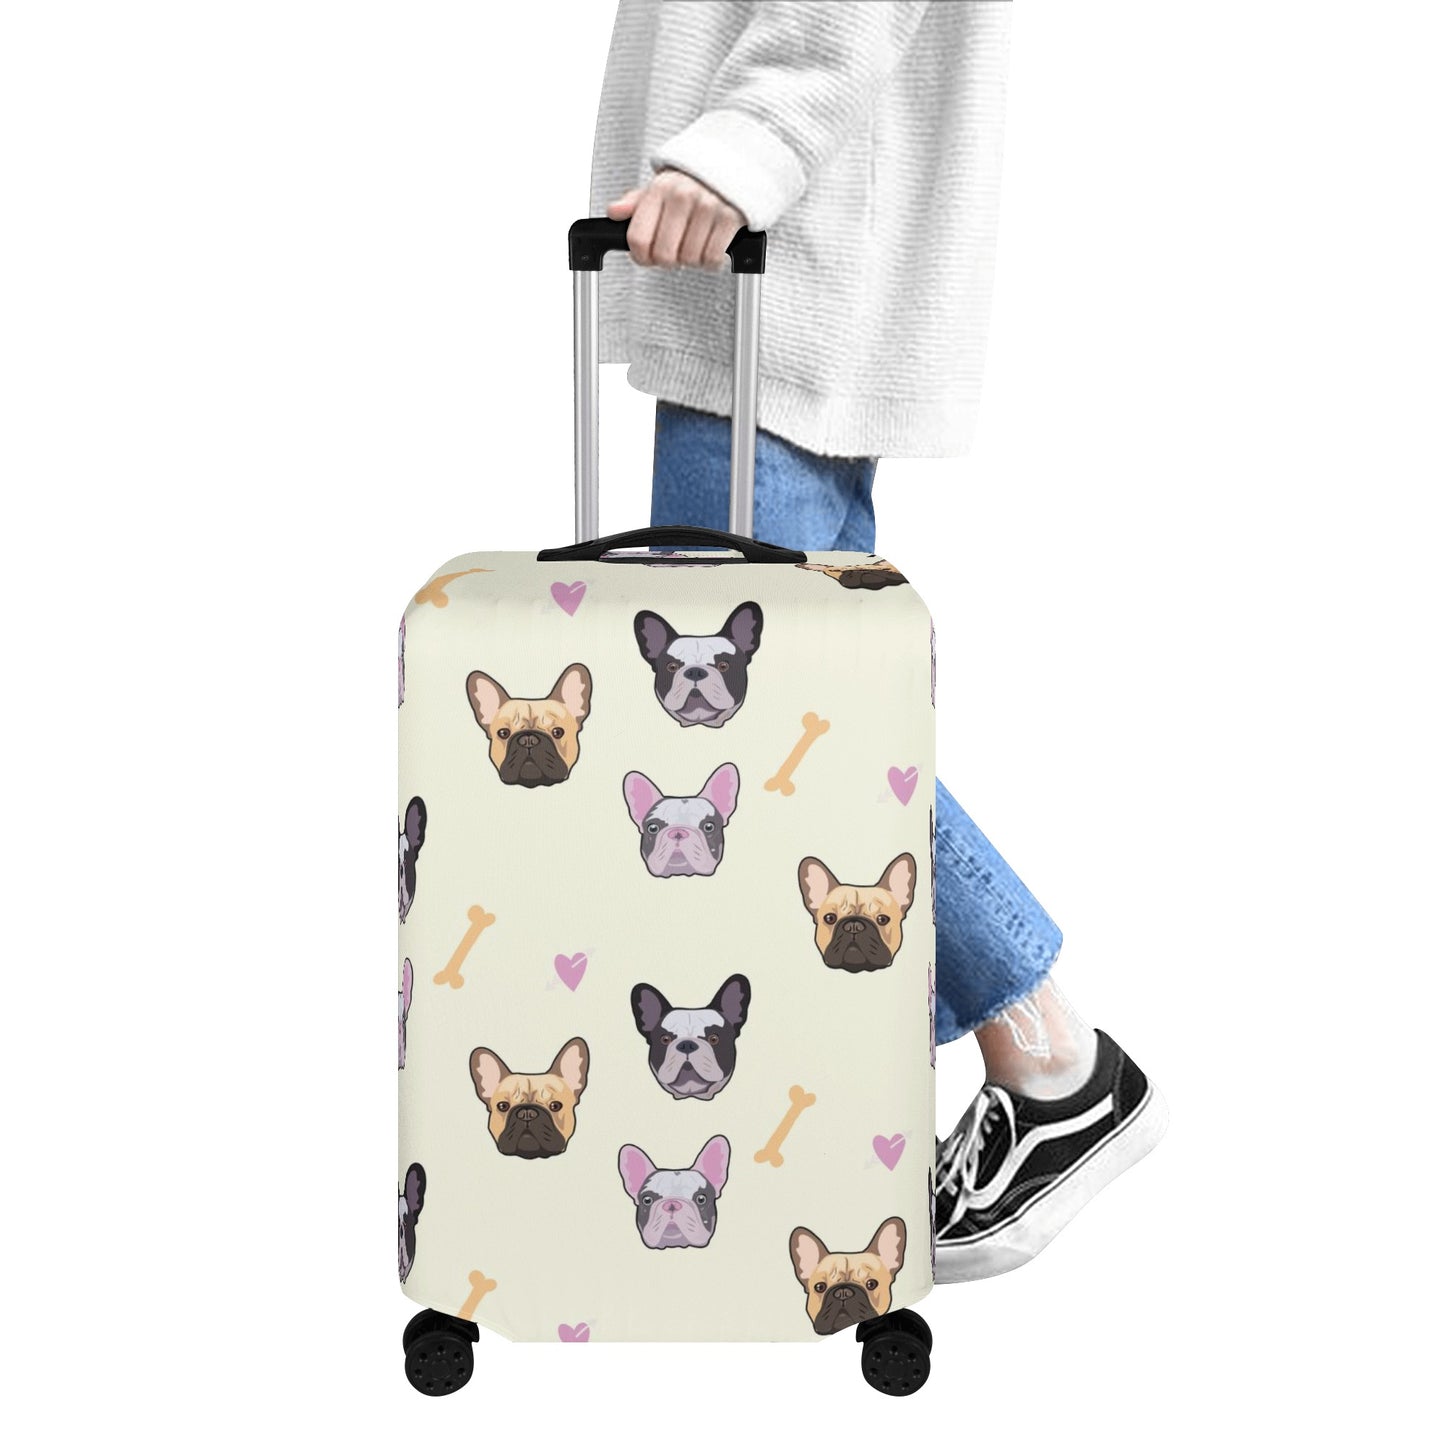 Otis  - Luggage Cover